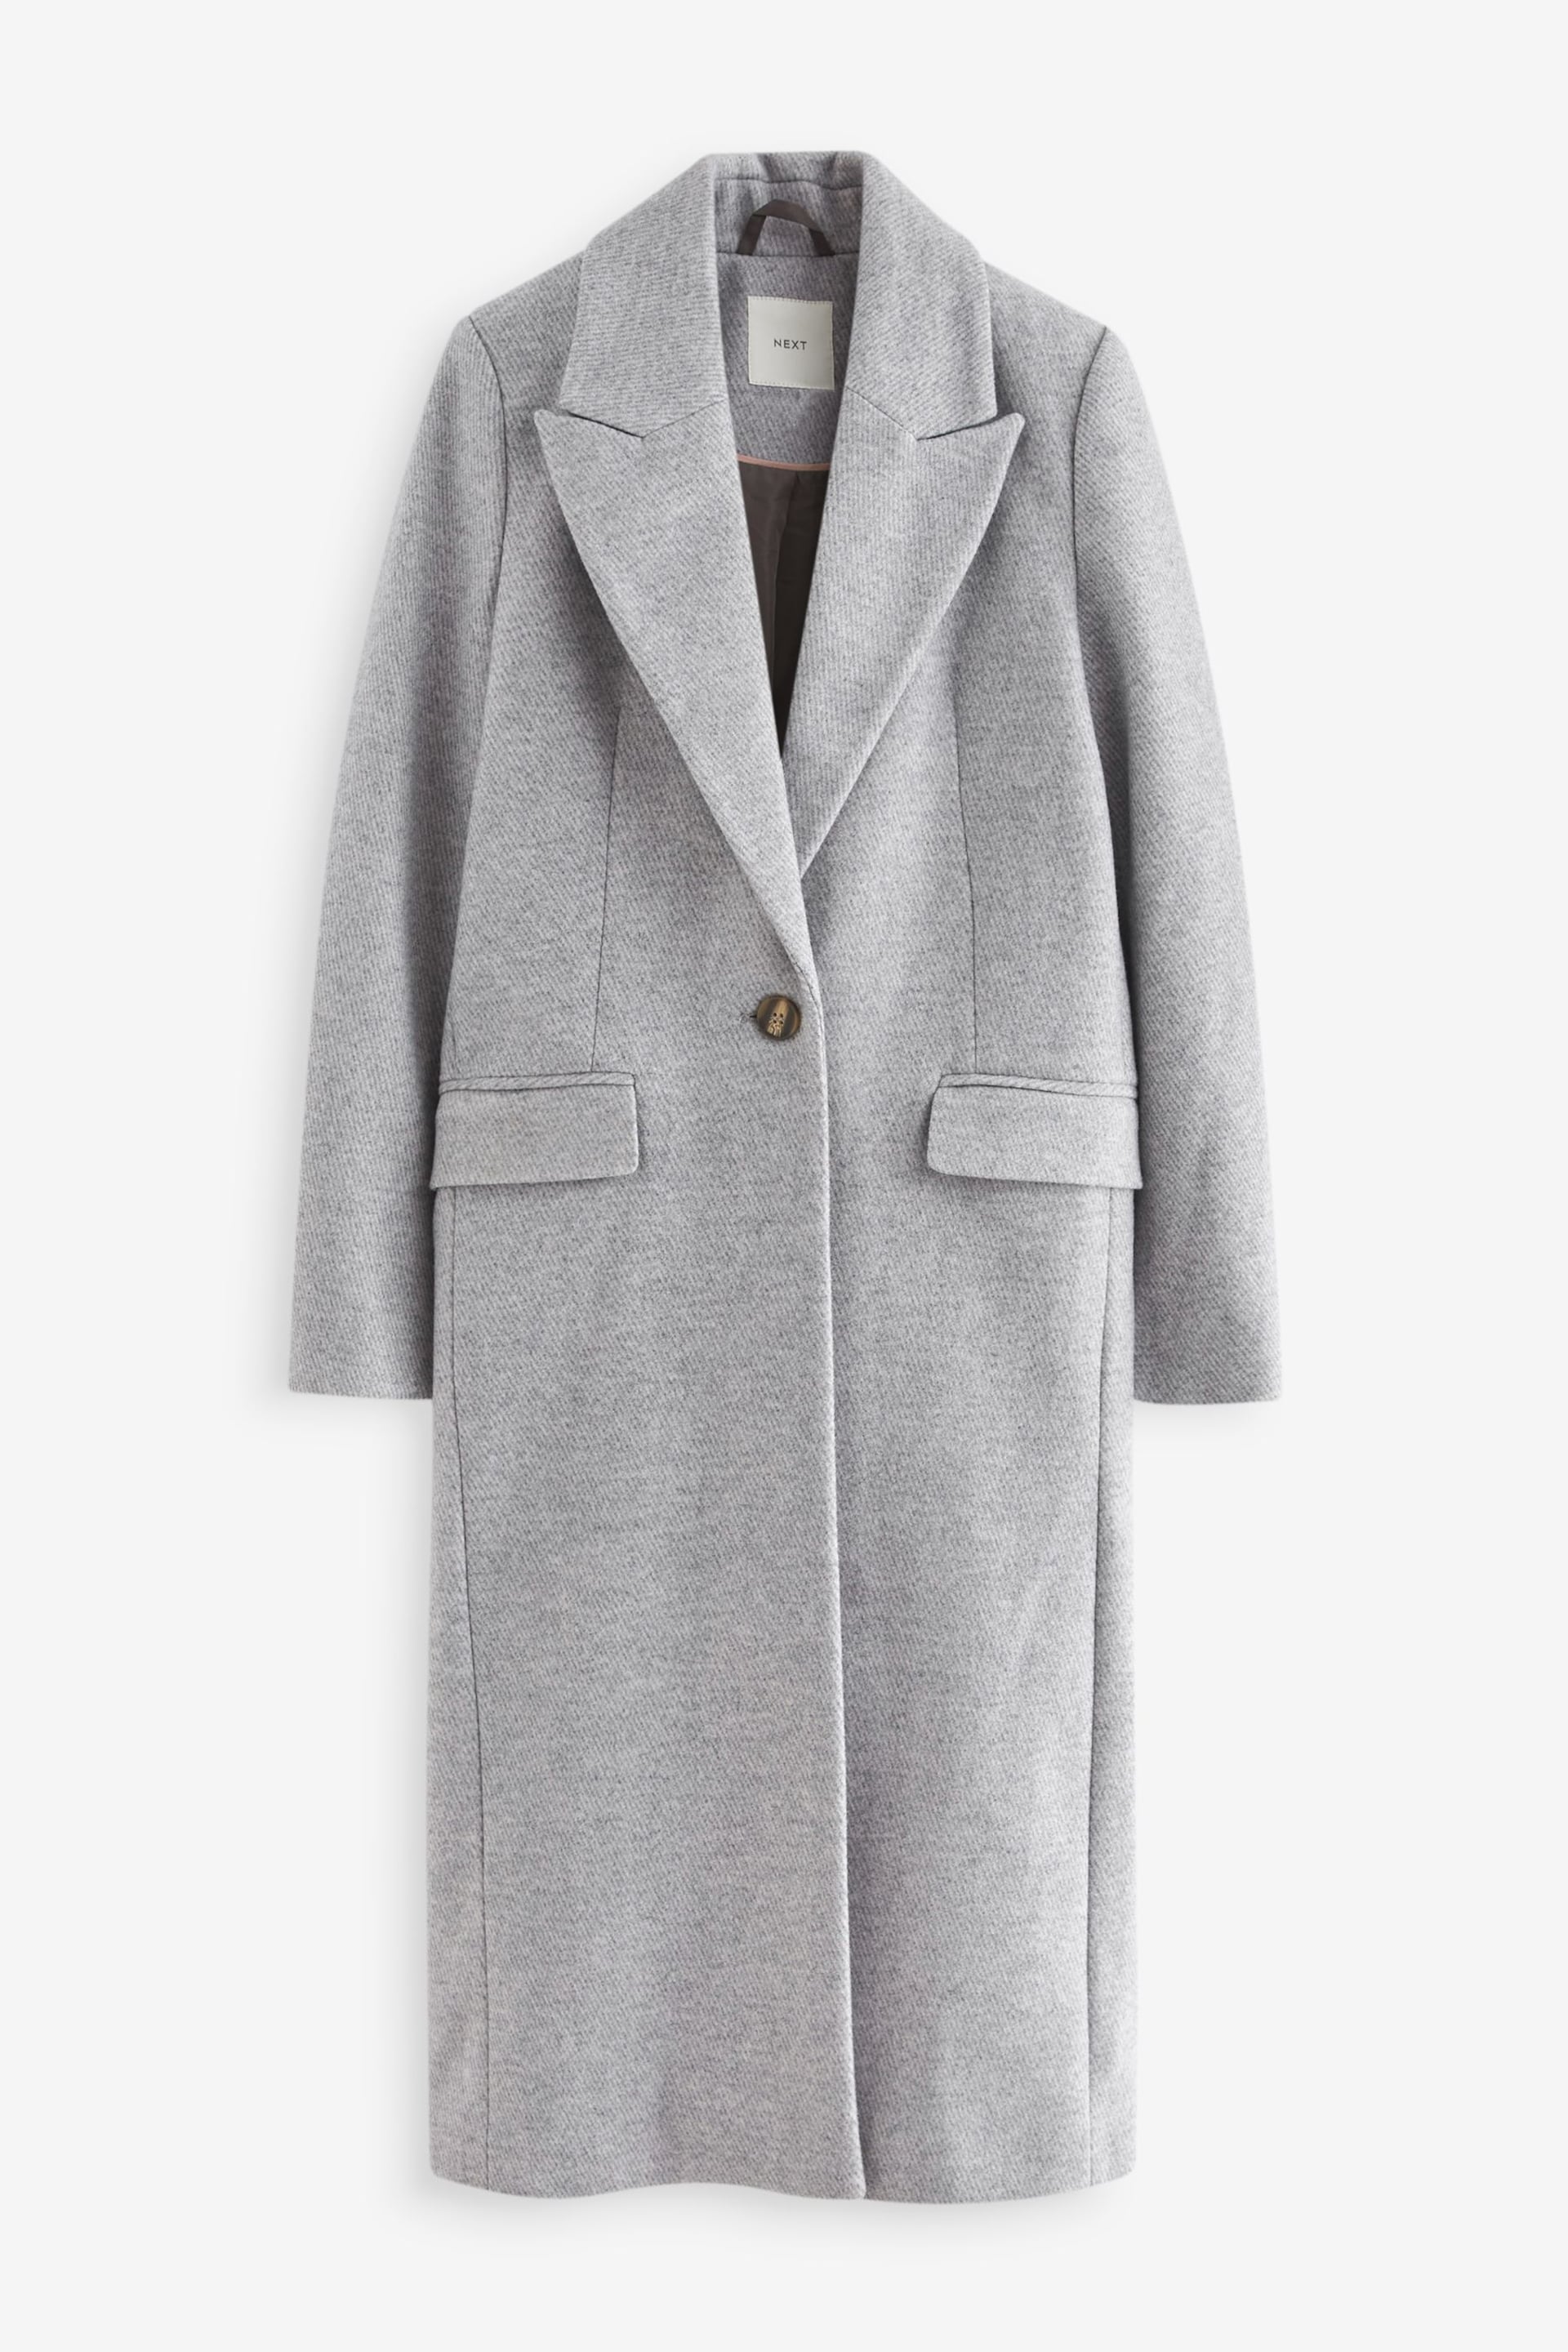 Grey Revere Collar Coat - Image 6 of 7